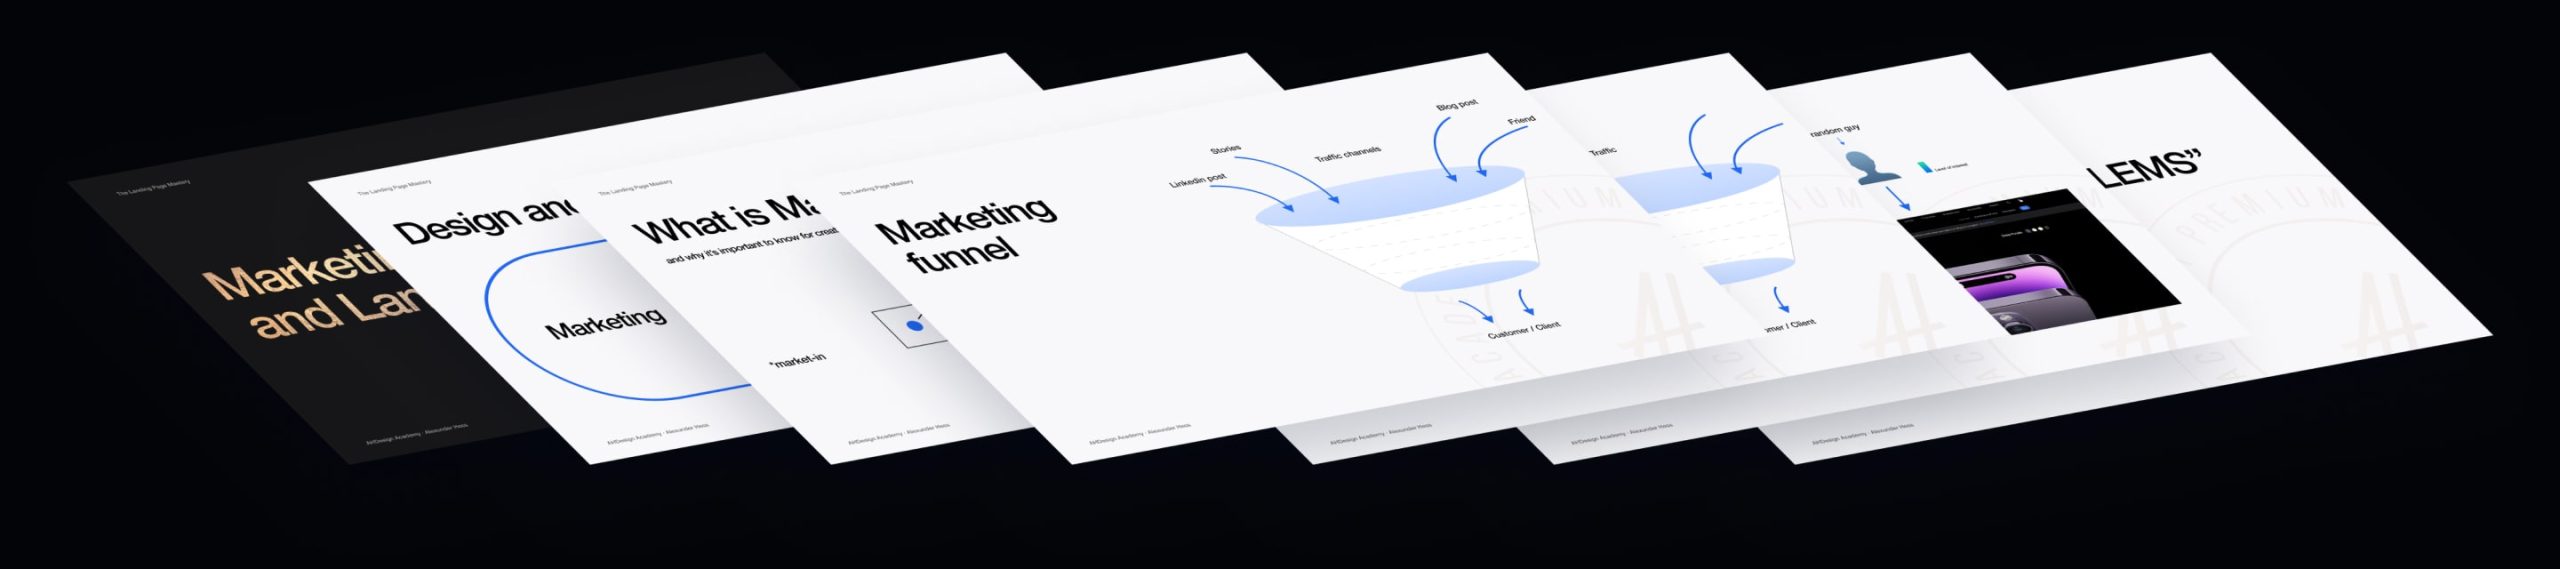 landing-page-mastery-course-alexunder-hess-design-download